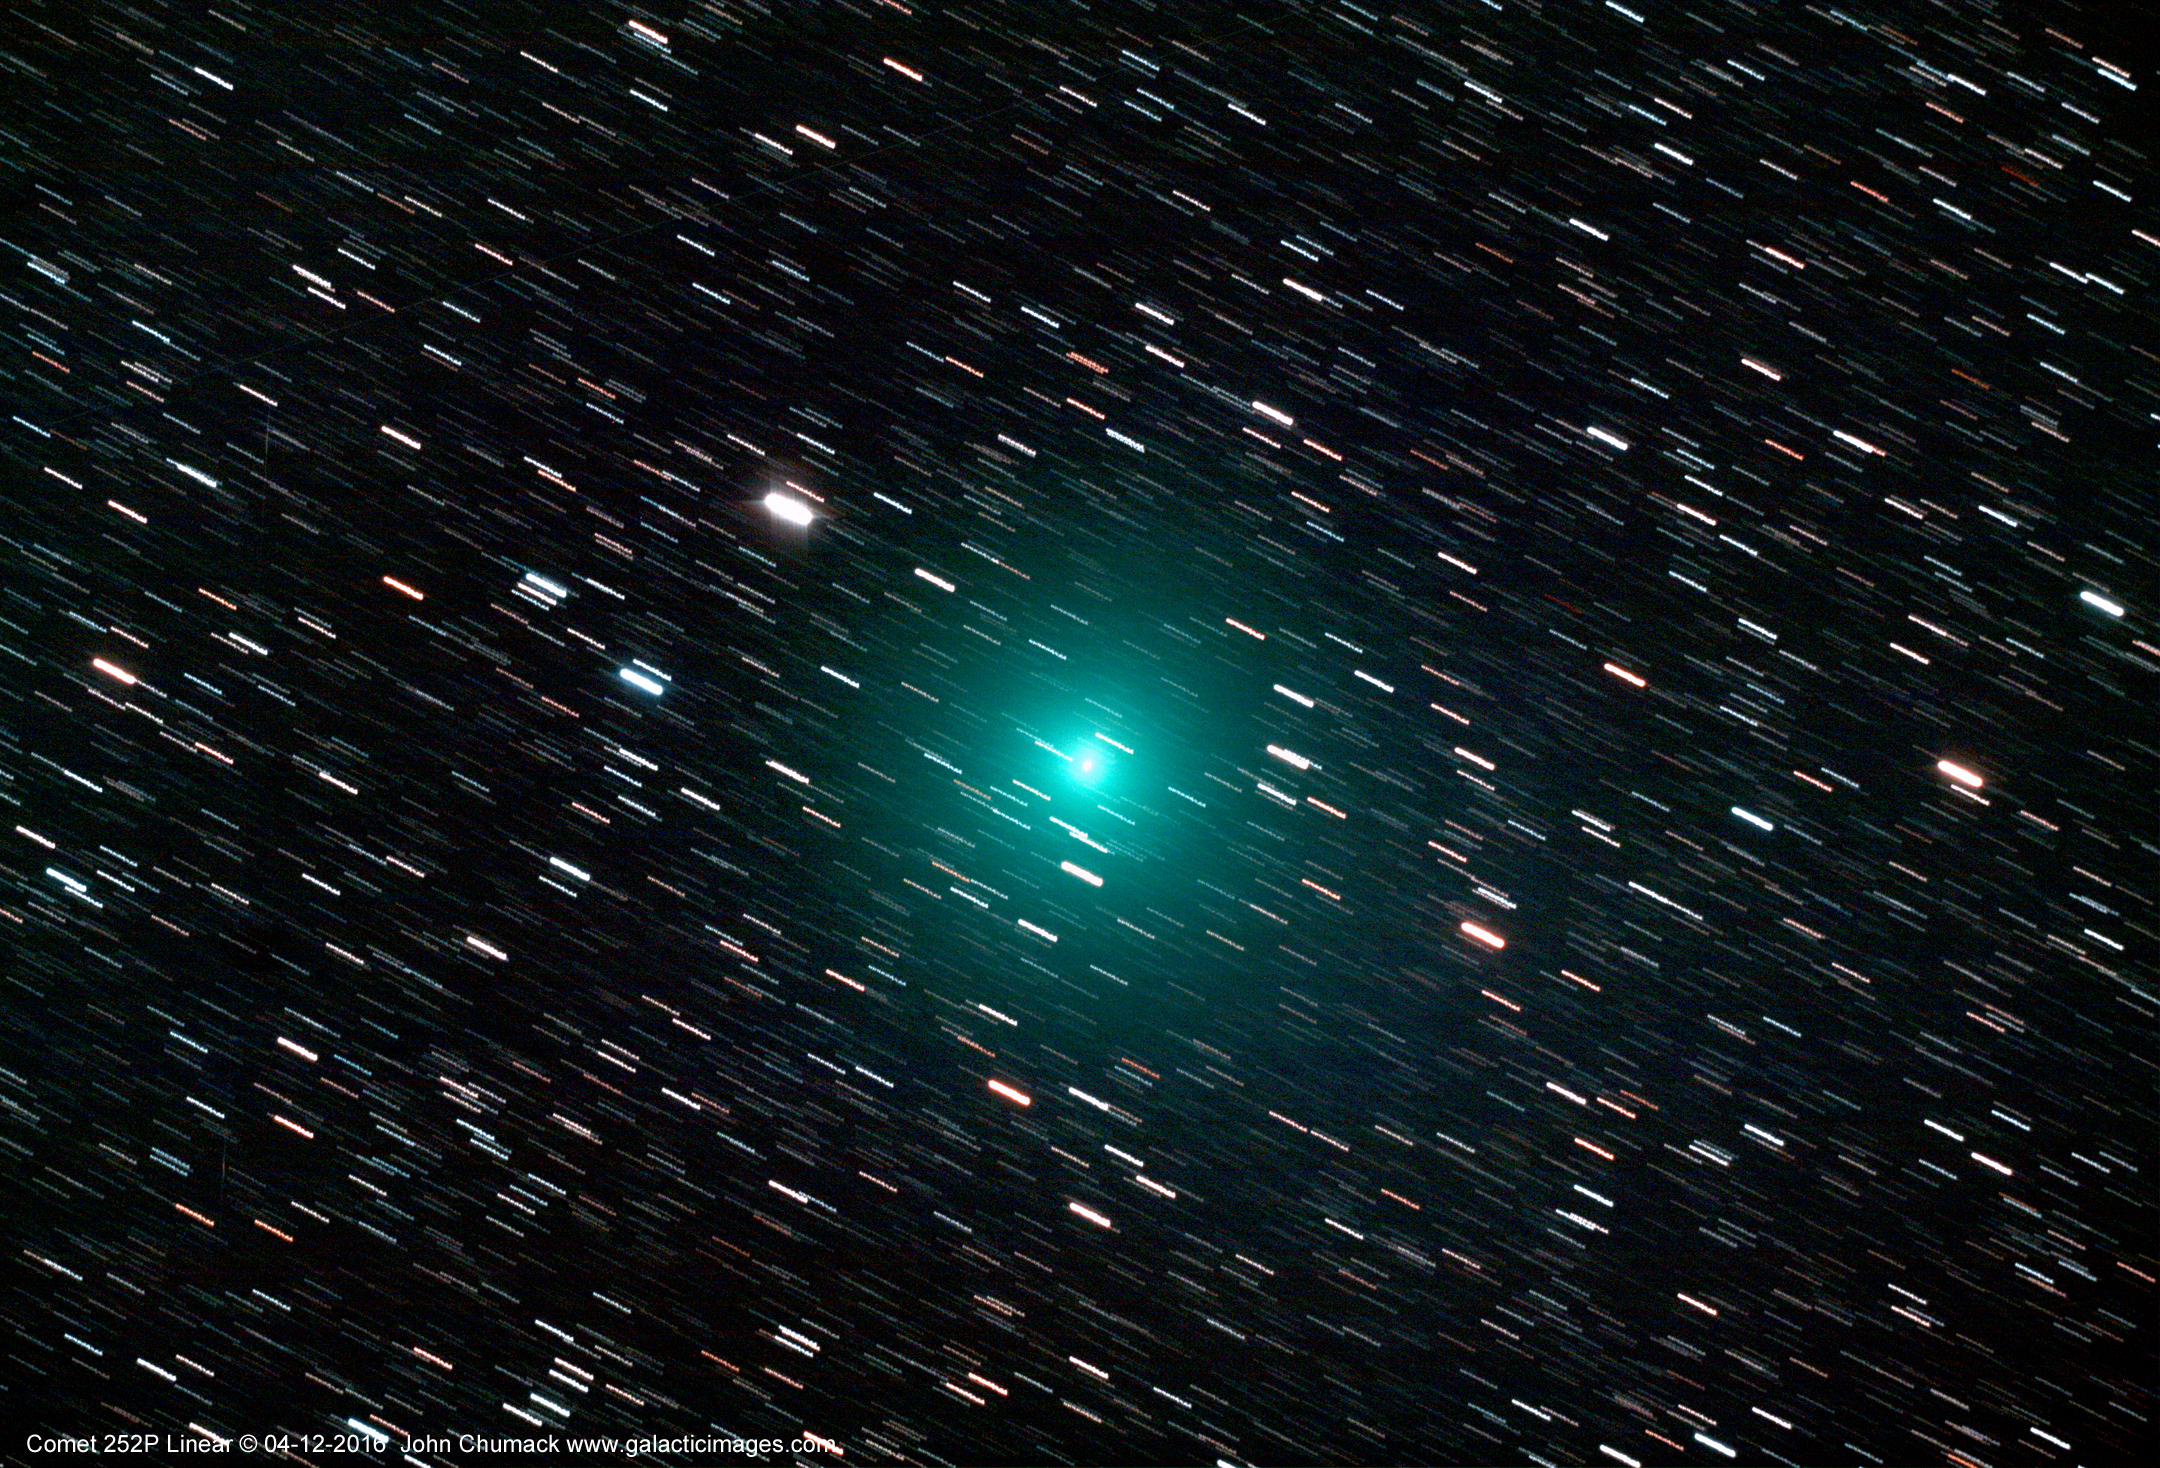 Green Comet Thrills Amateur Astronomer (Photo)